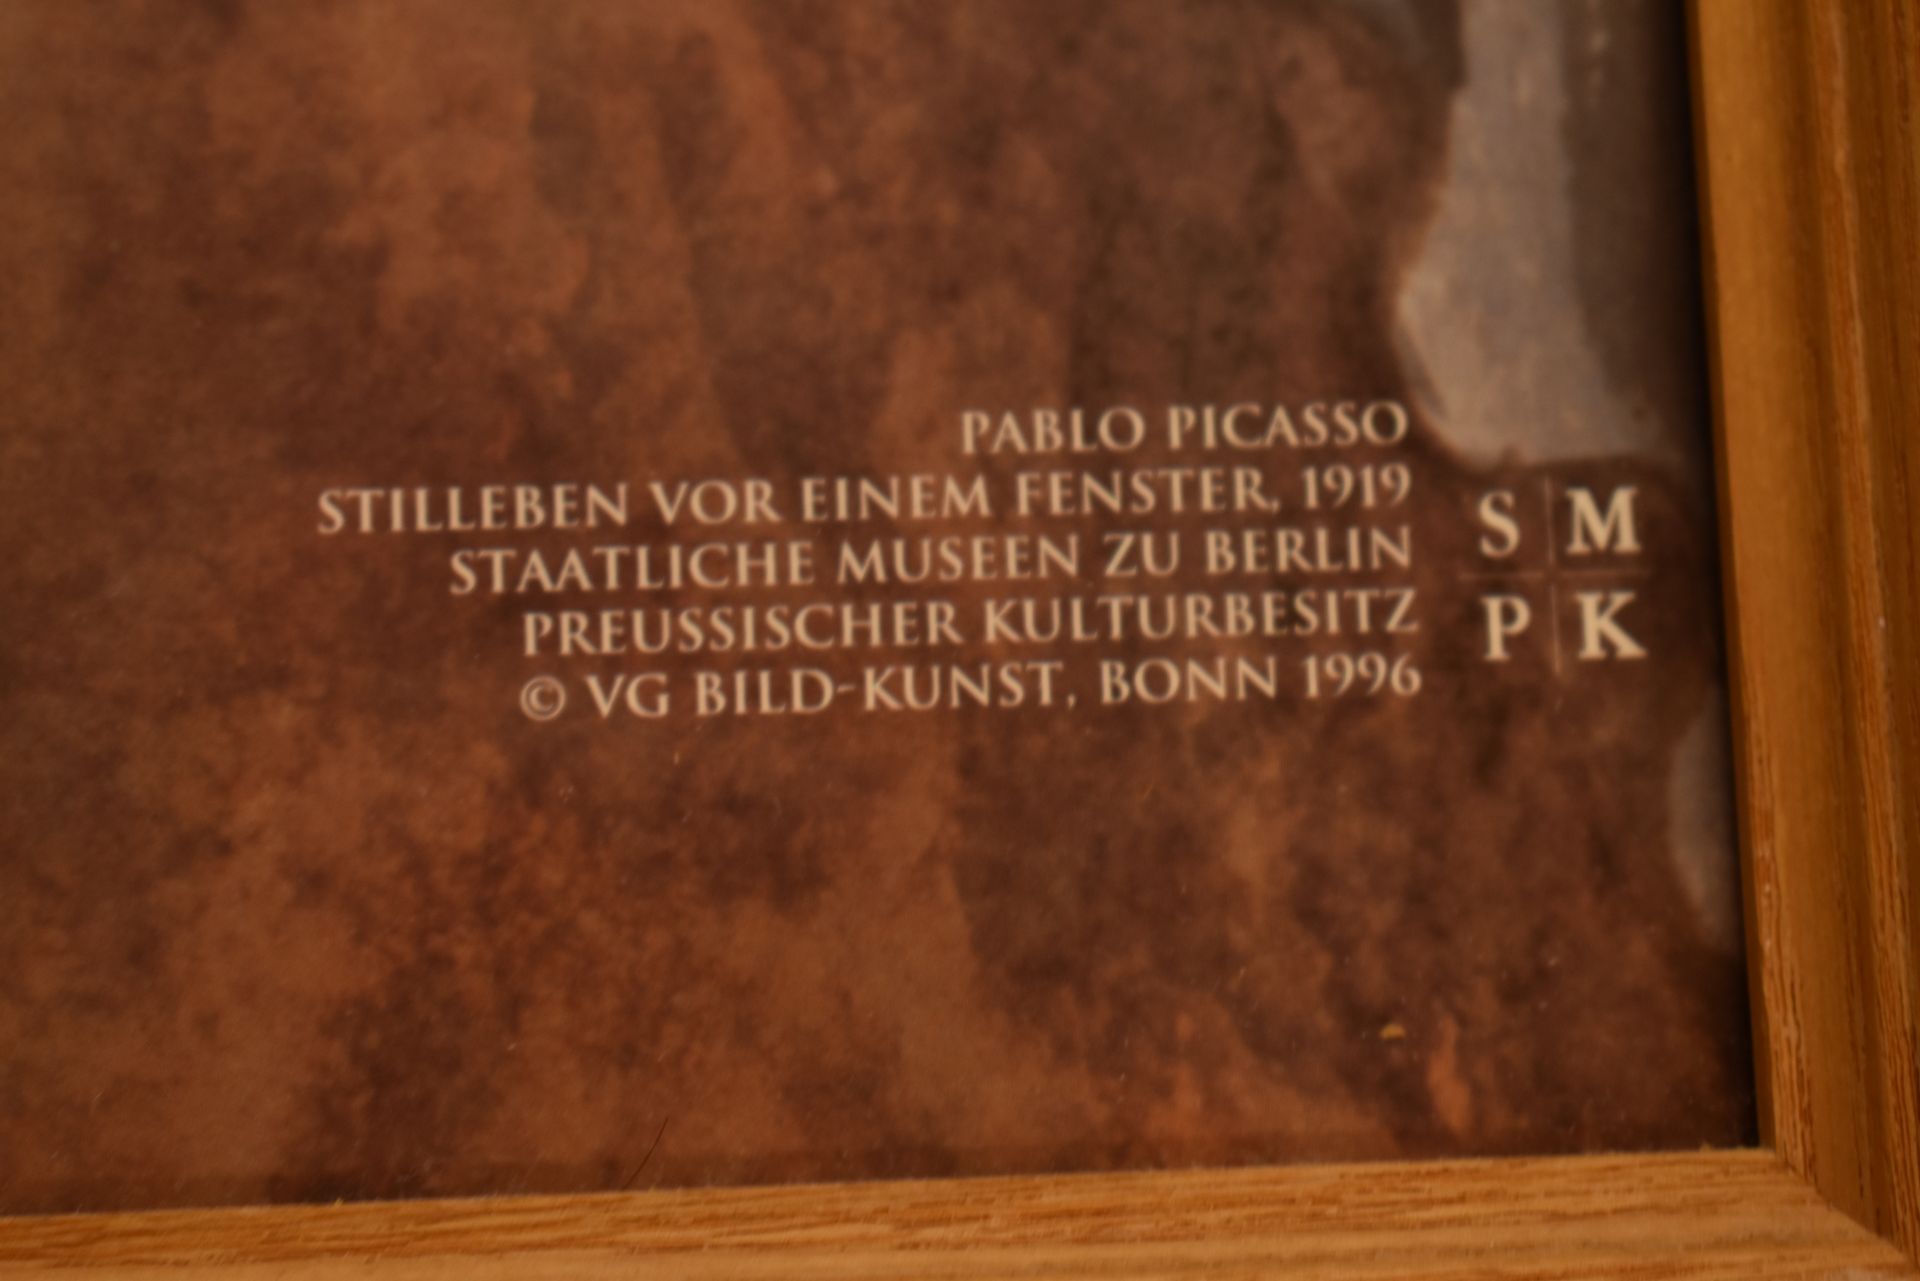 PICASSO - 1996 STAATLICHE MUSEEN SU BERLIN EXHIBITION POSTER - Image 4 of 4